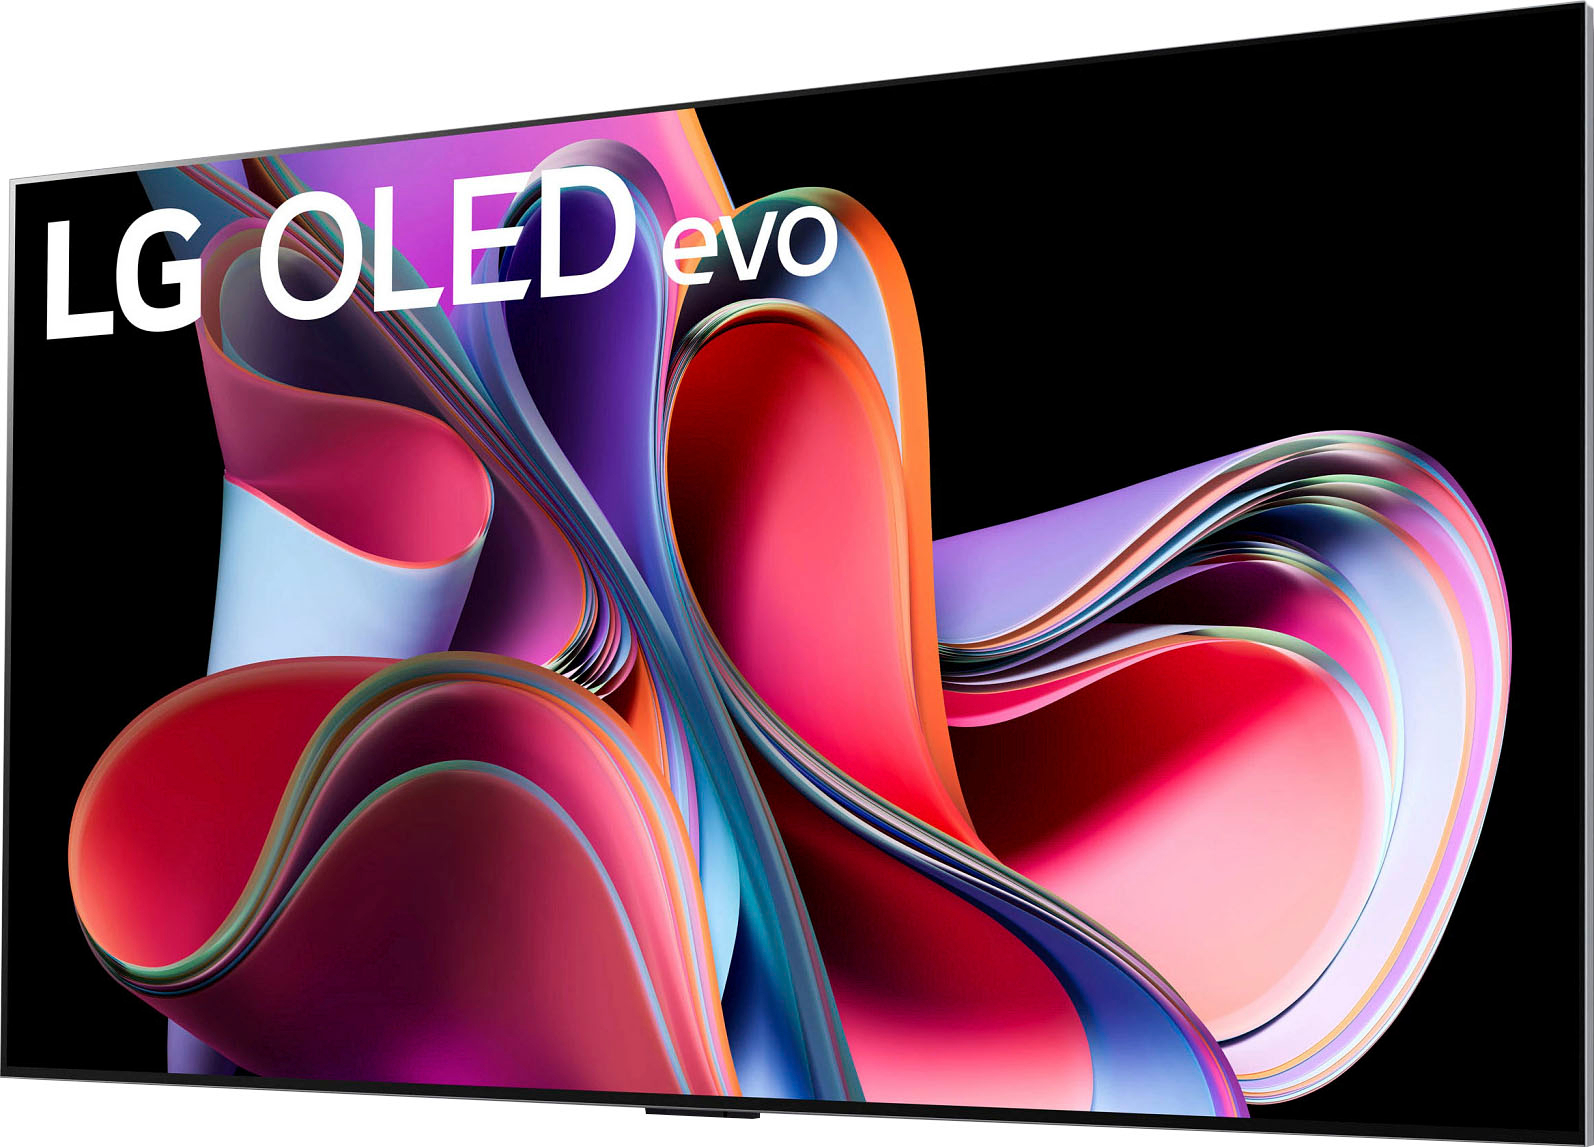 LG OLED55C36 OLED EVO panel smart Television with advanced Alpha 9 AI  Processor